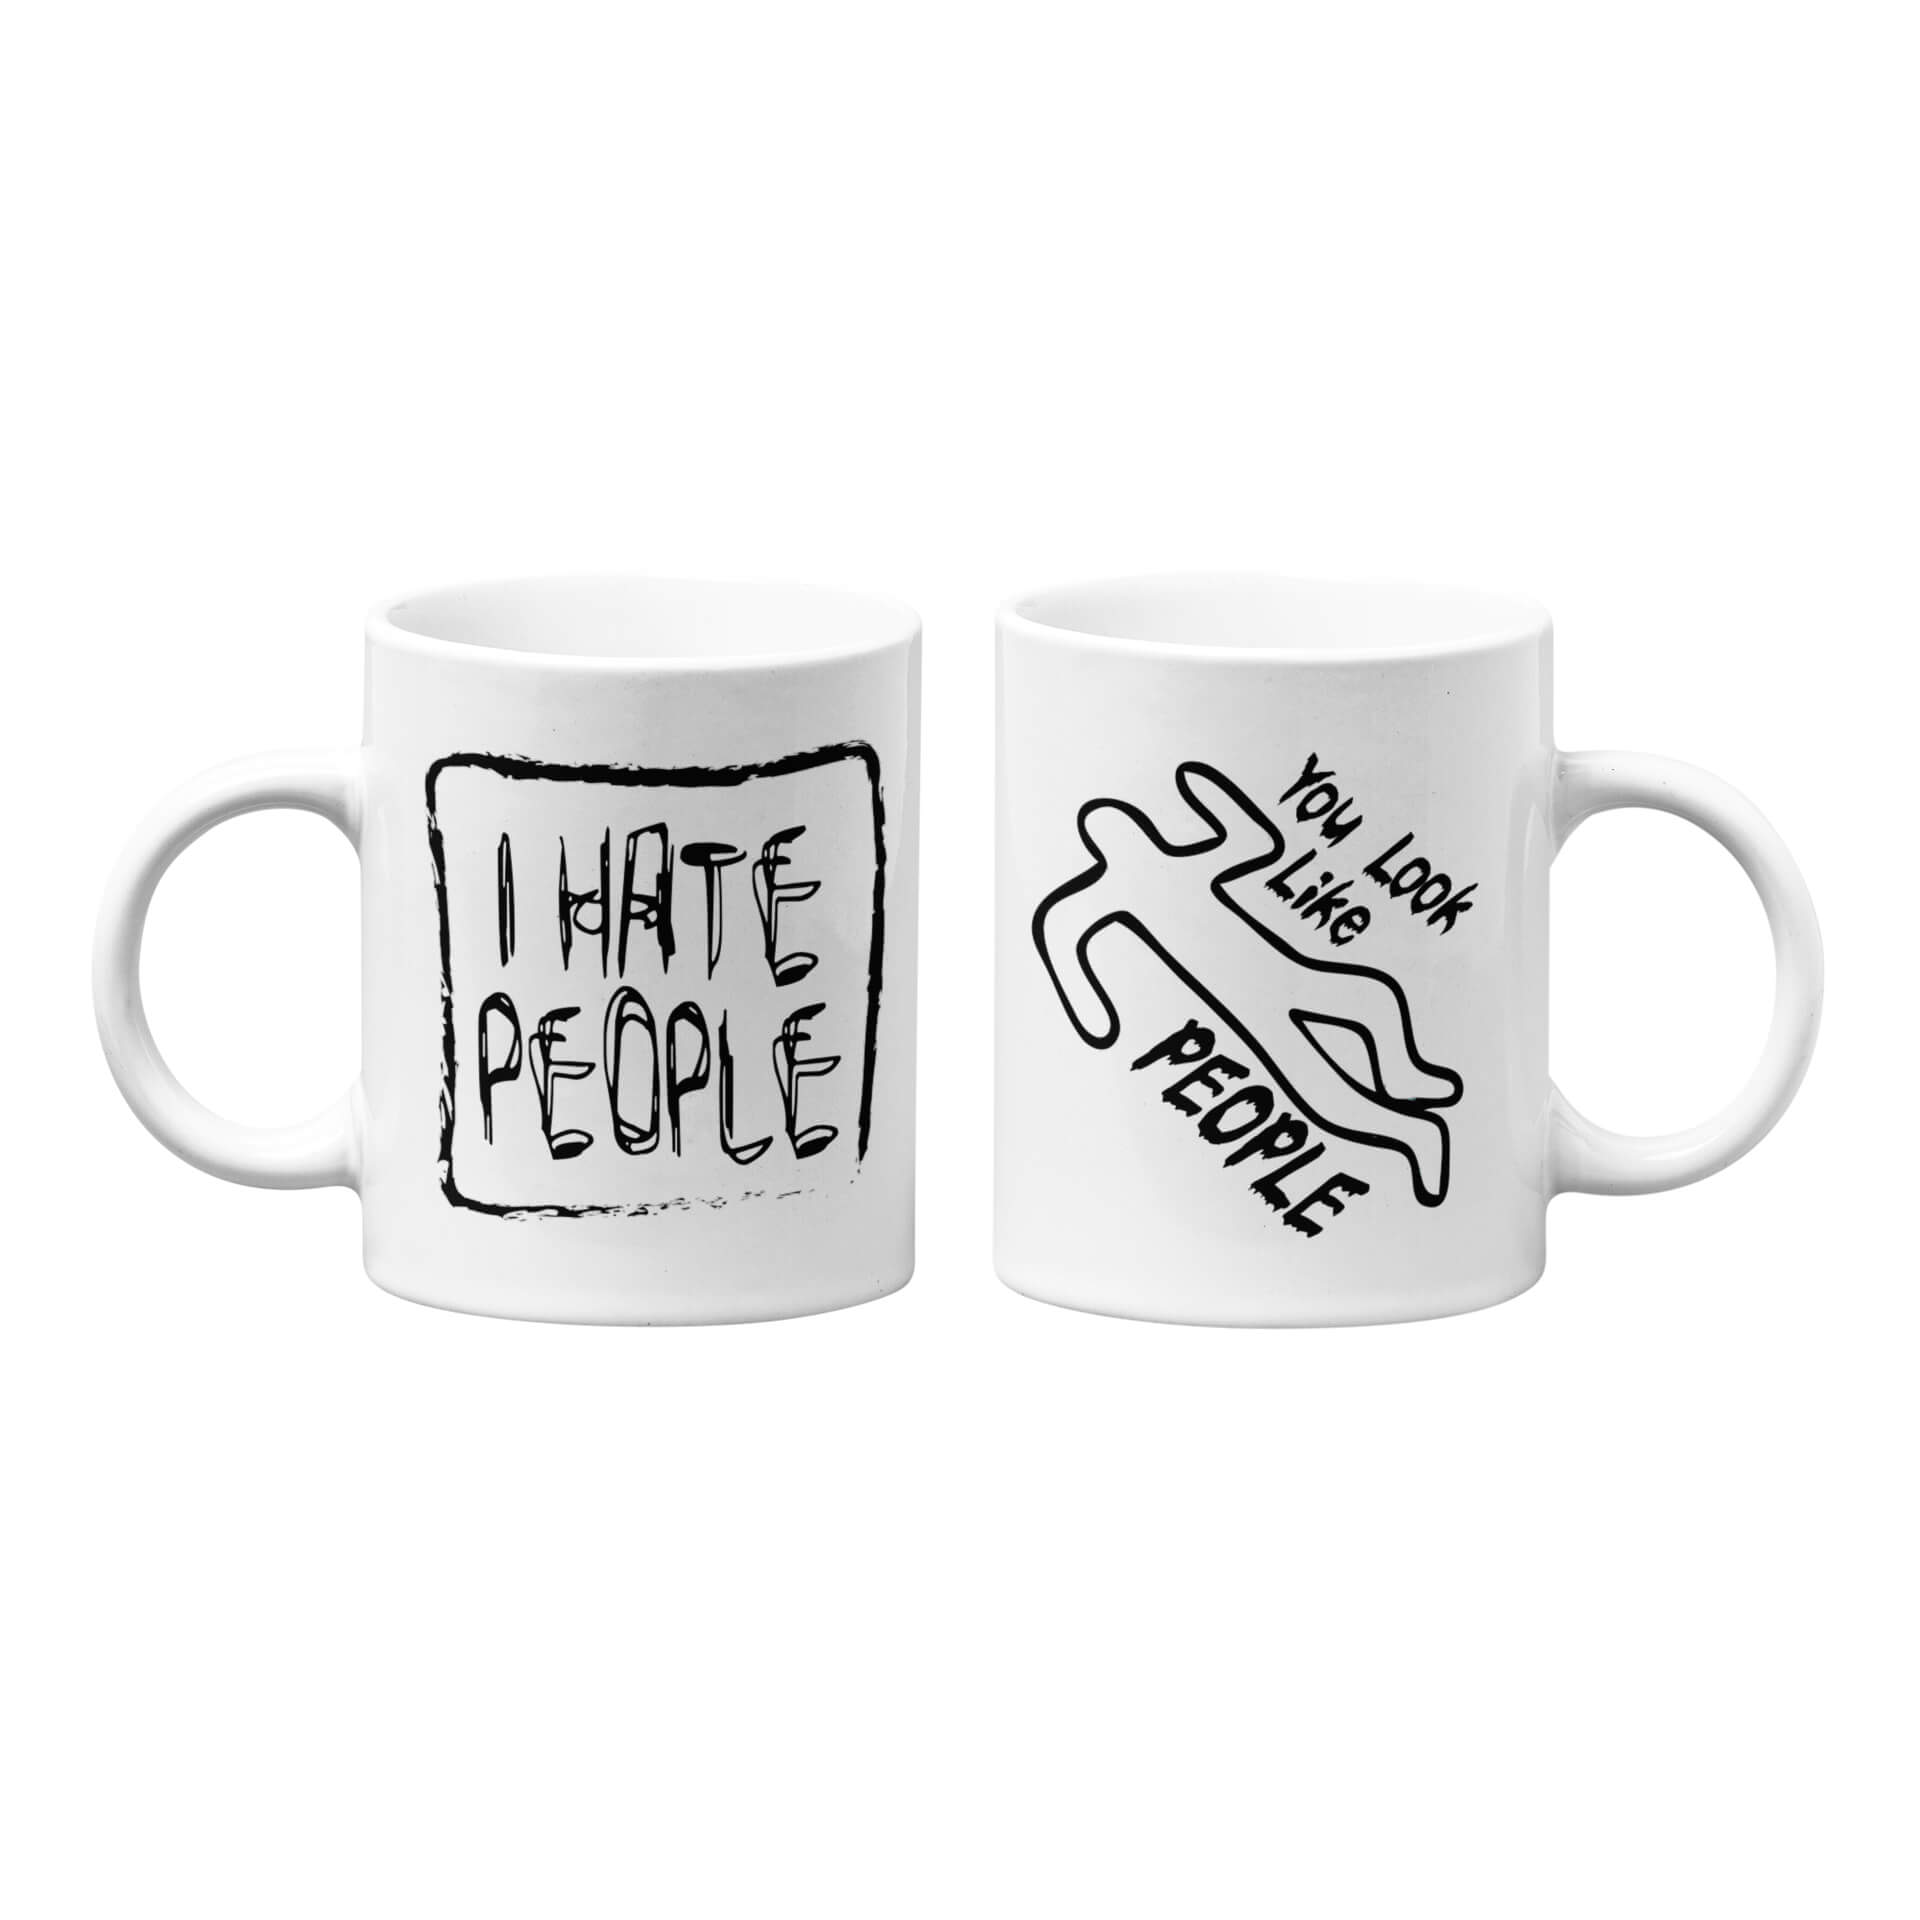 You Look Like People - I Hate People Mug